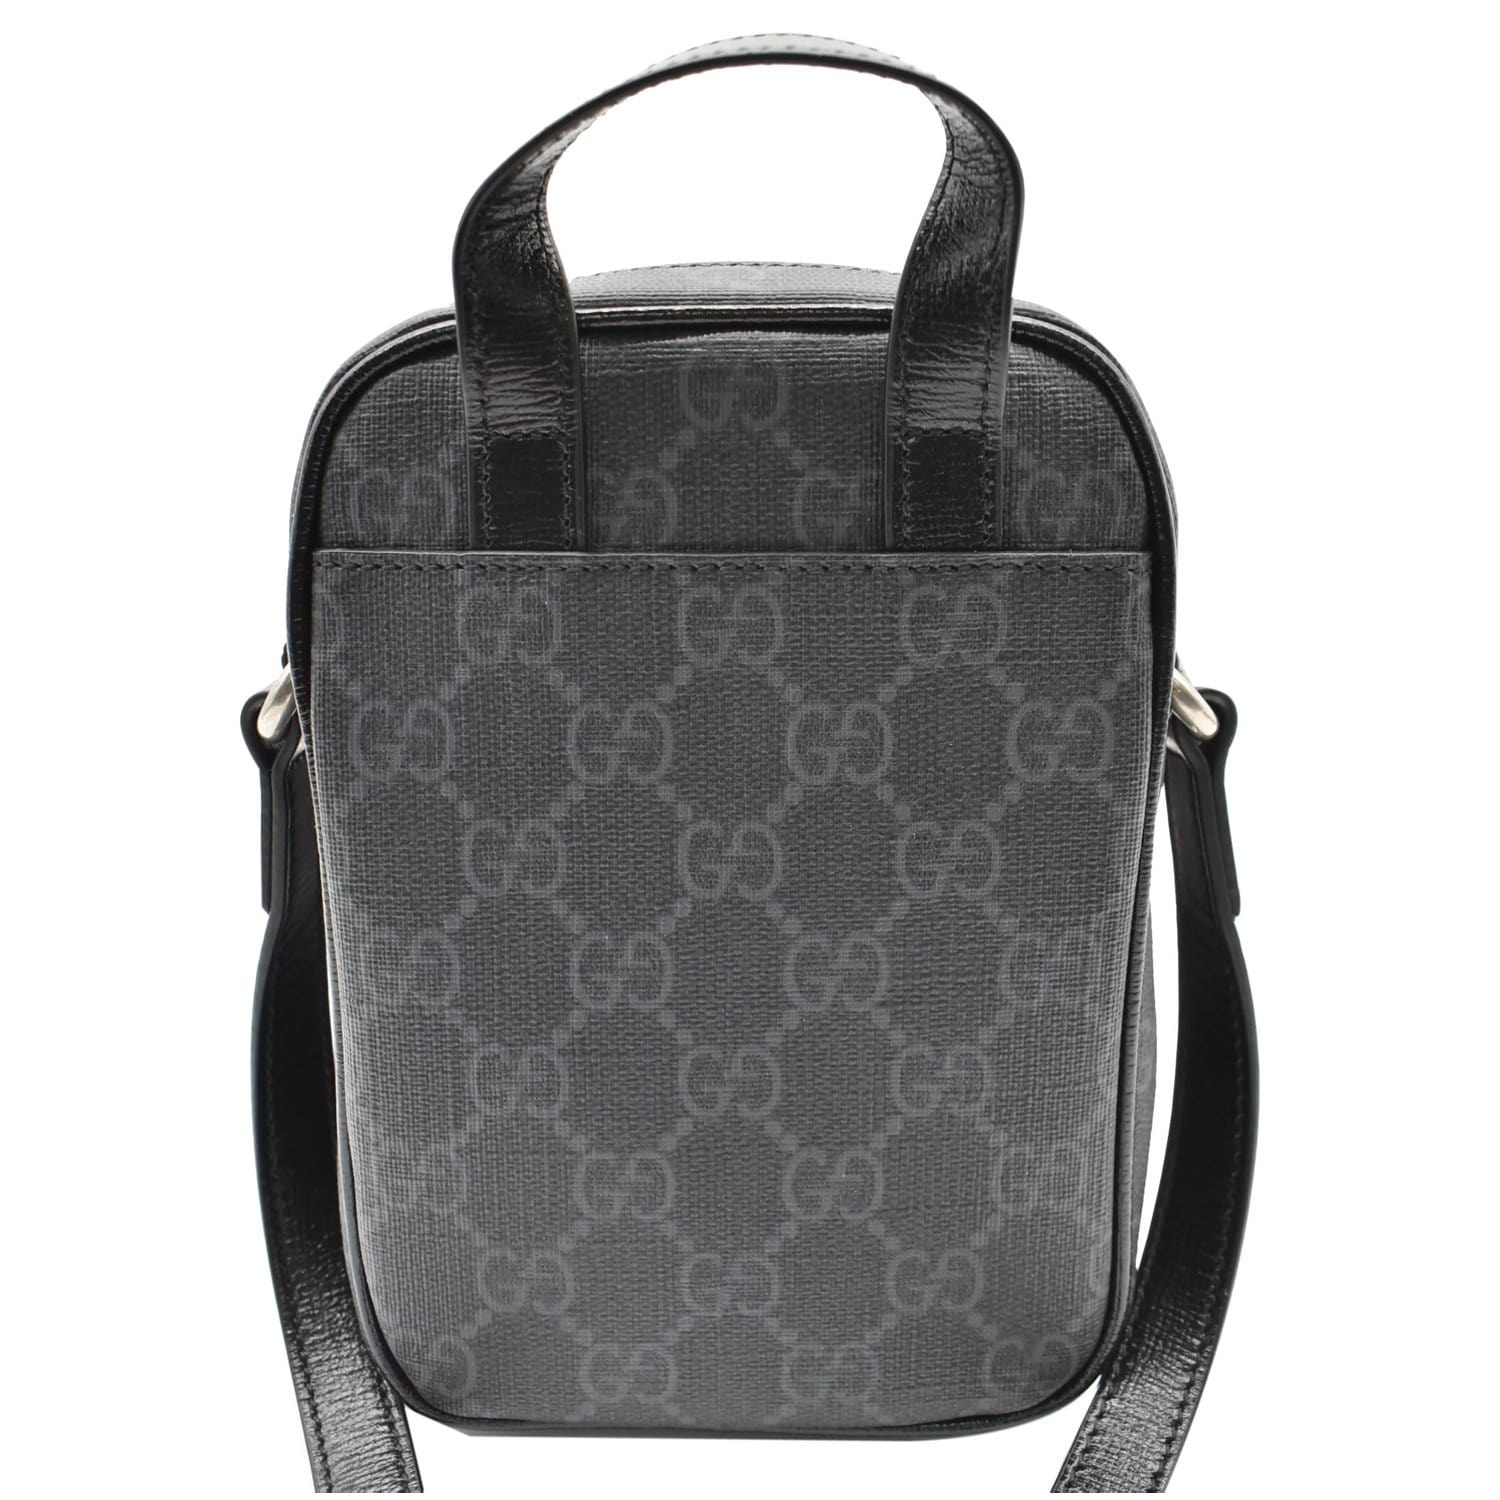 Interlocking G Heart Mini Crossbody Bag in Black - Gucci